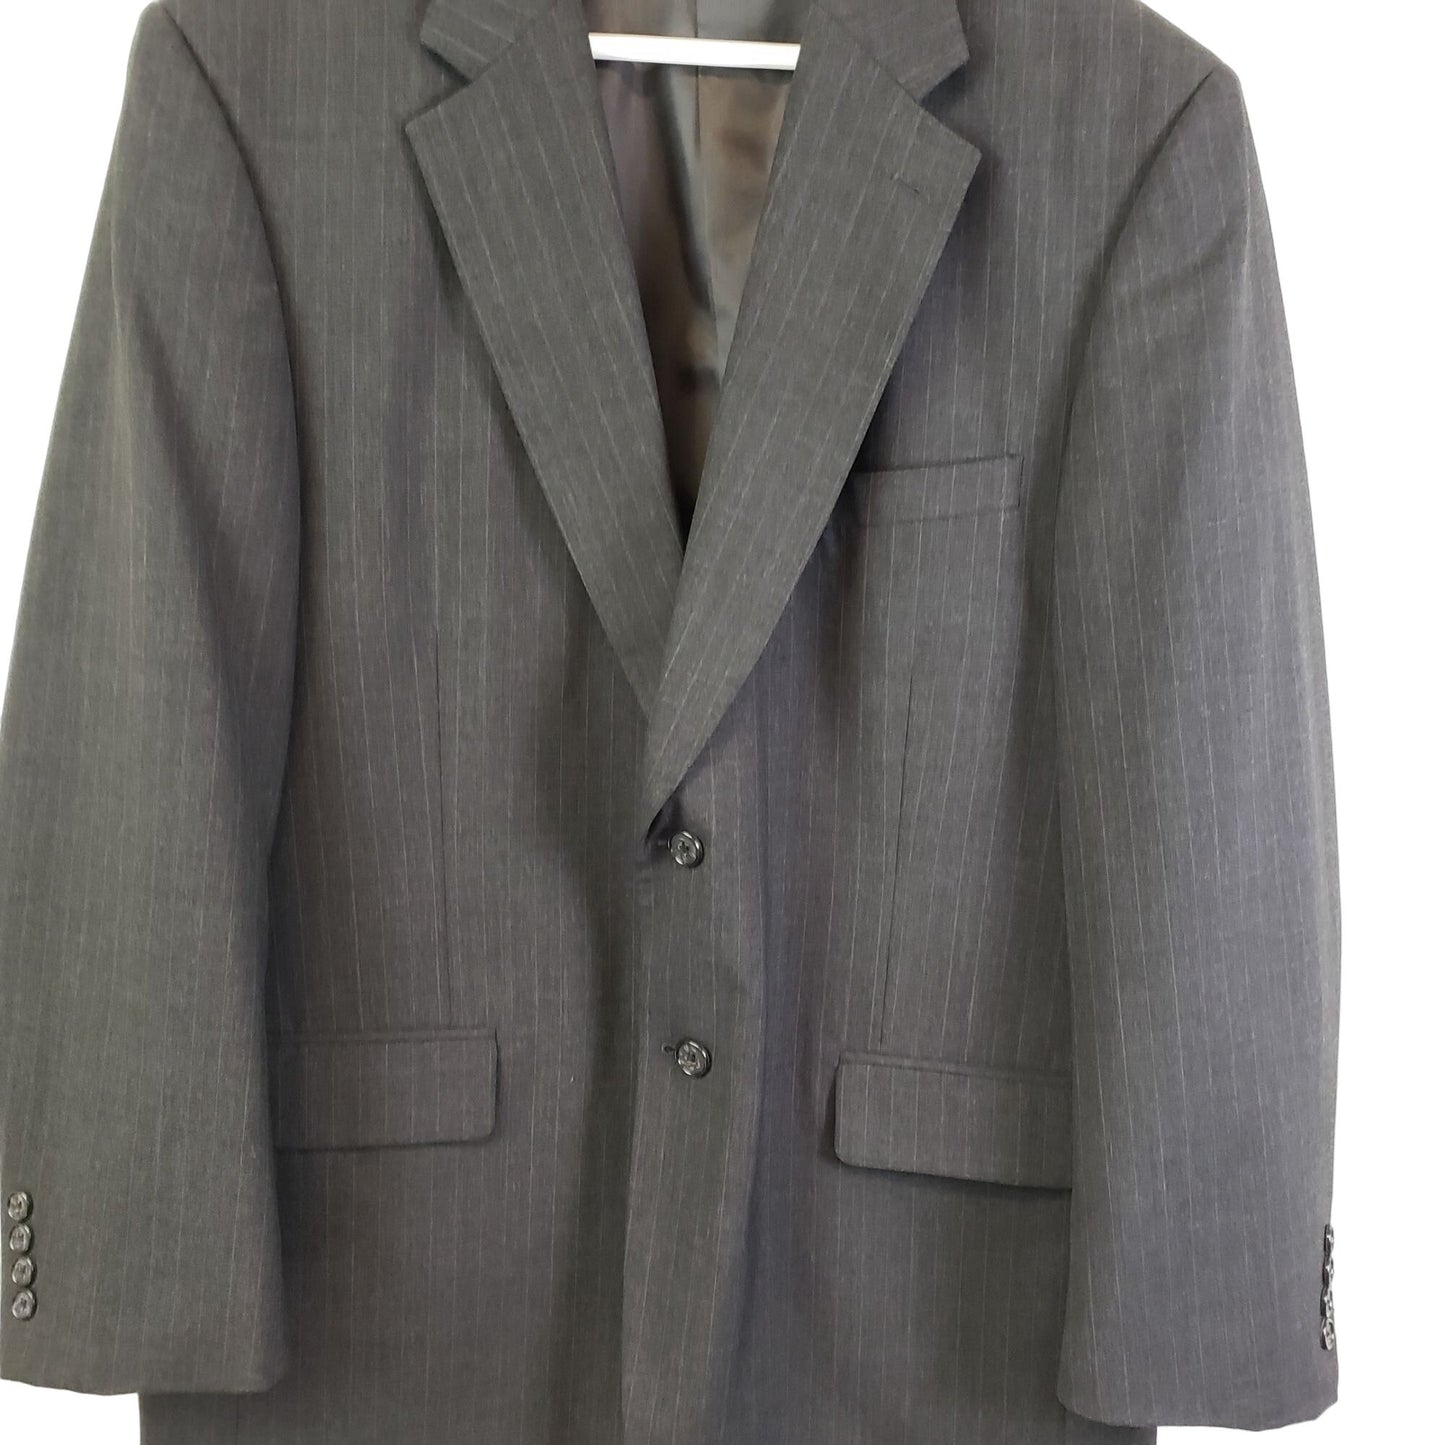 Statements Wool Blend 2 Button Pinstripe Suit Jacket Size 44R